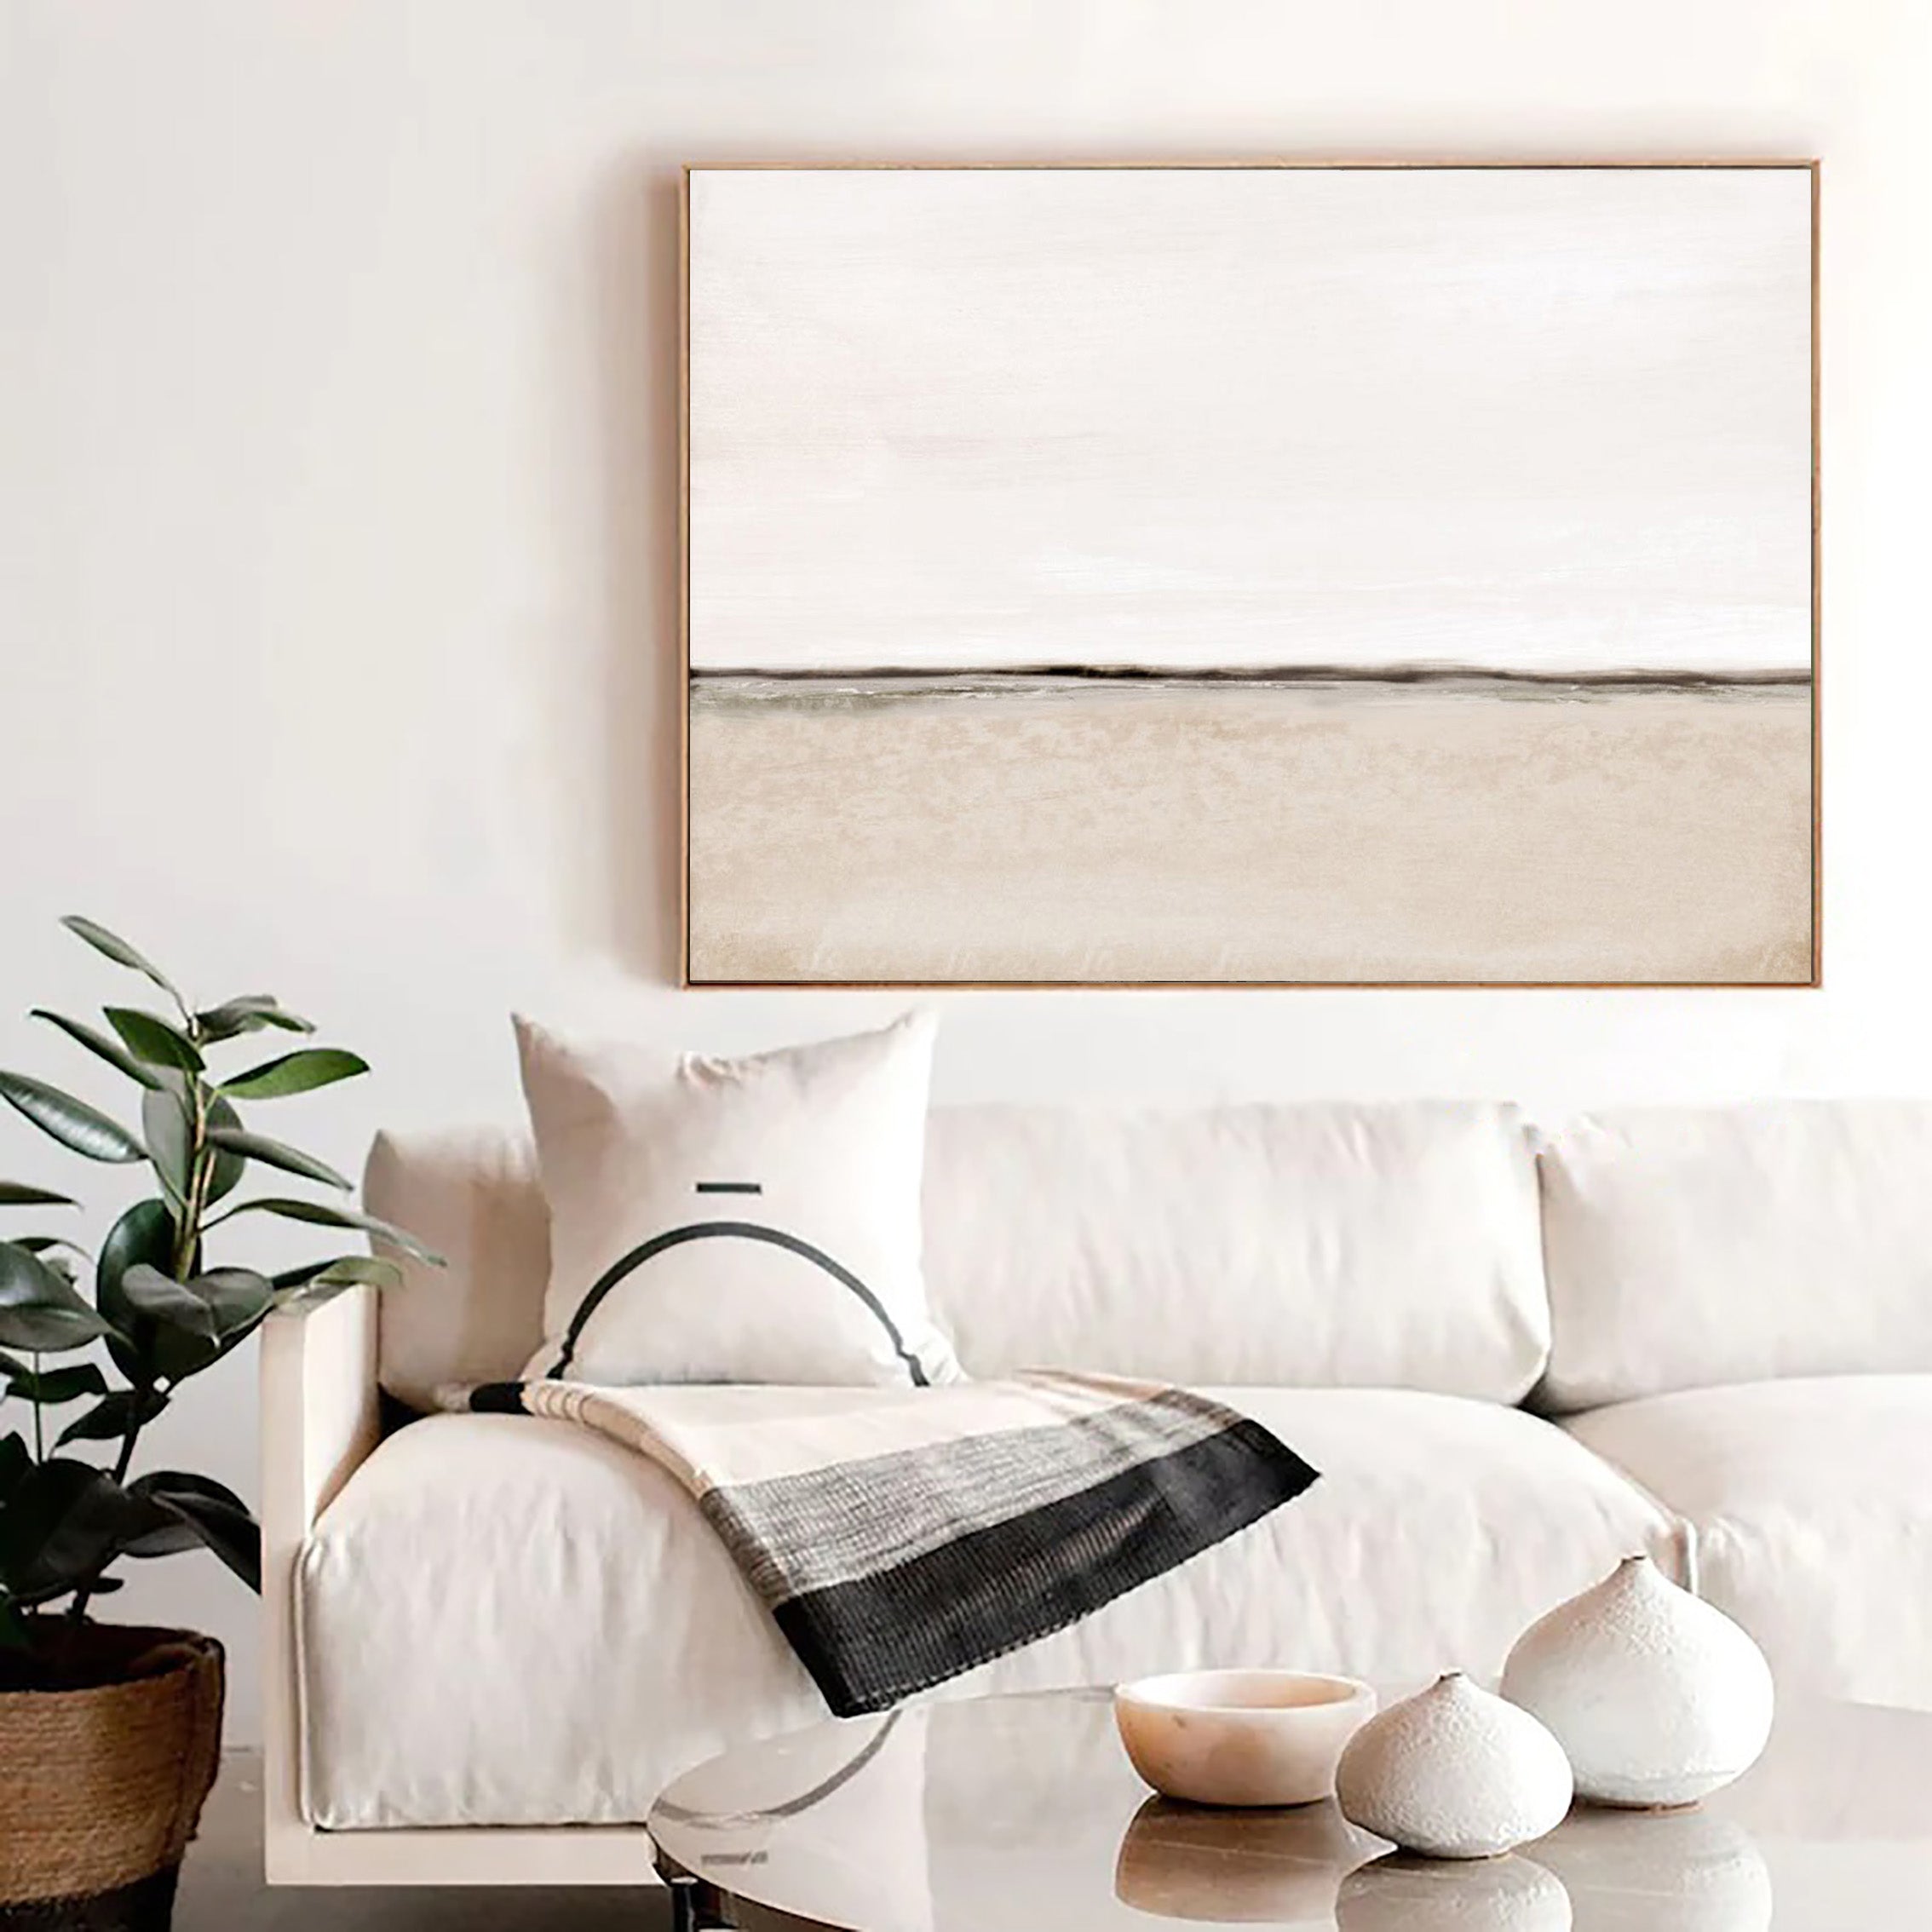 Original Beige White Abstract Painting On Canvas, Handmade Wabi Sabi Wall Art For Bedroom